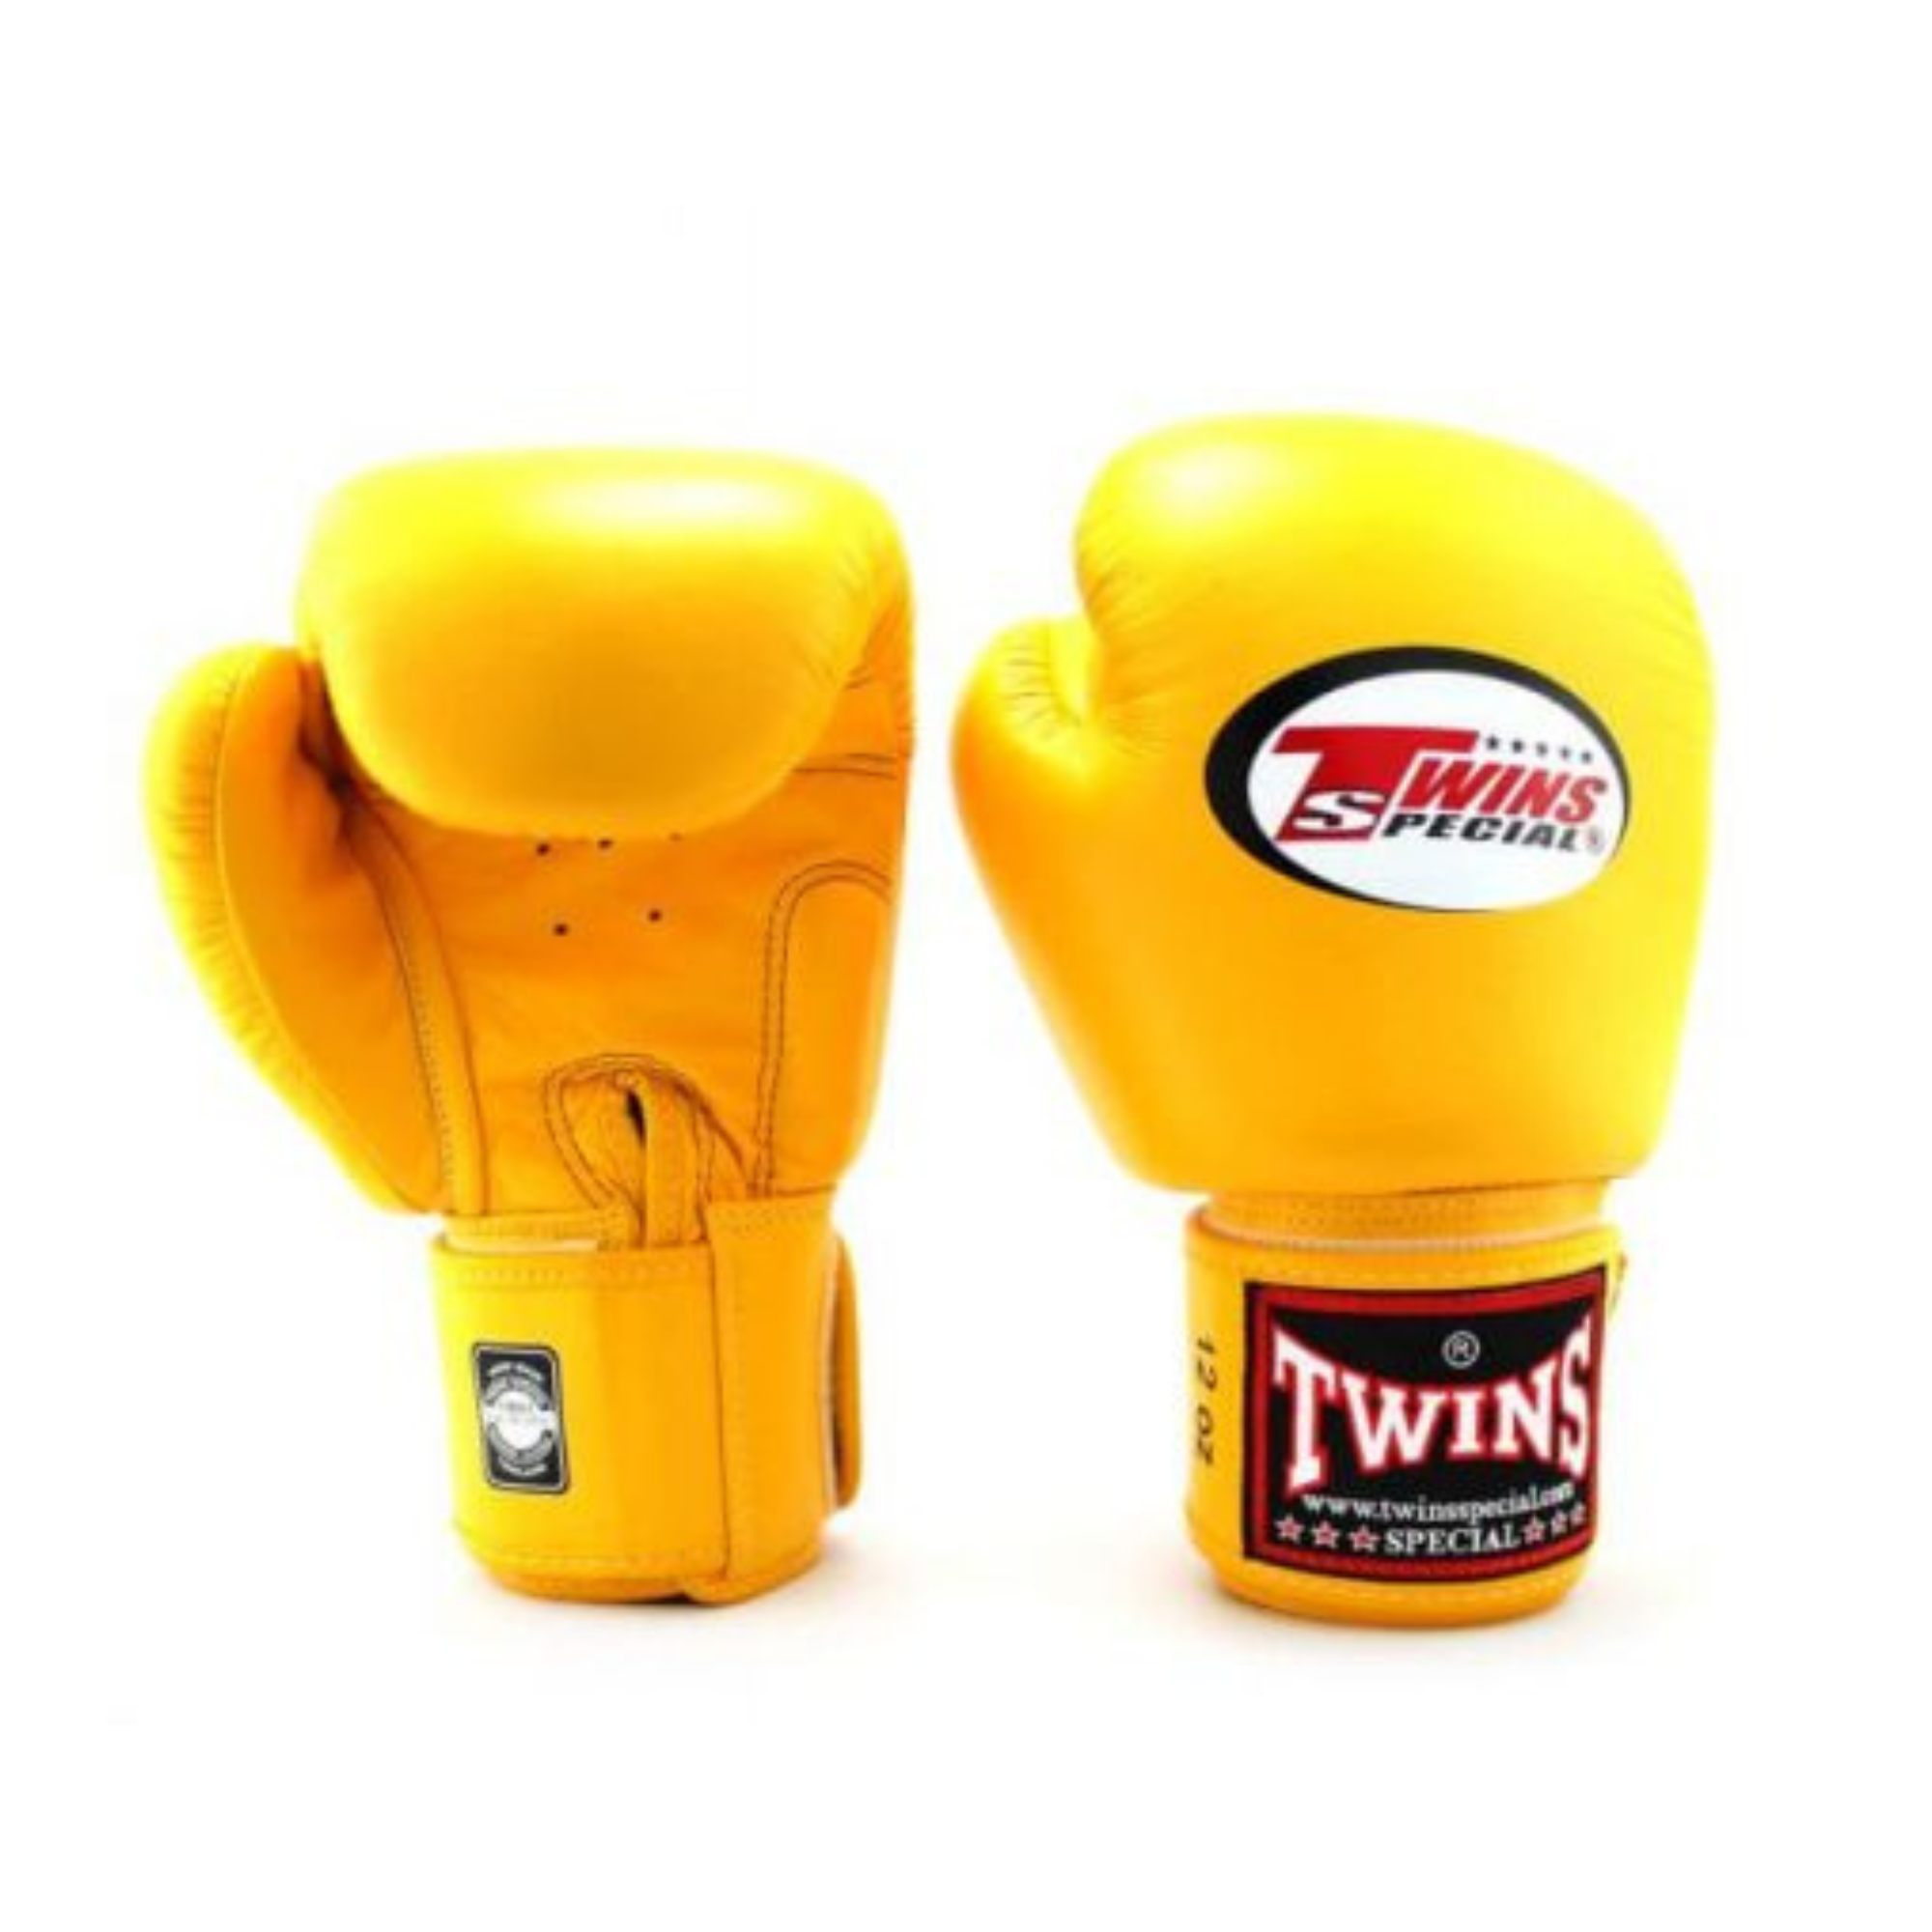 Shop Online for Twins Special boxing gloves FBGVL3-57 at Blegend Online  Store